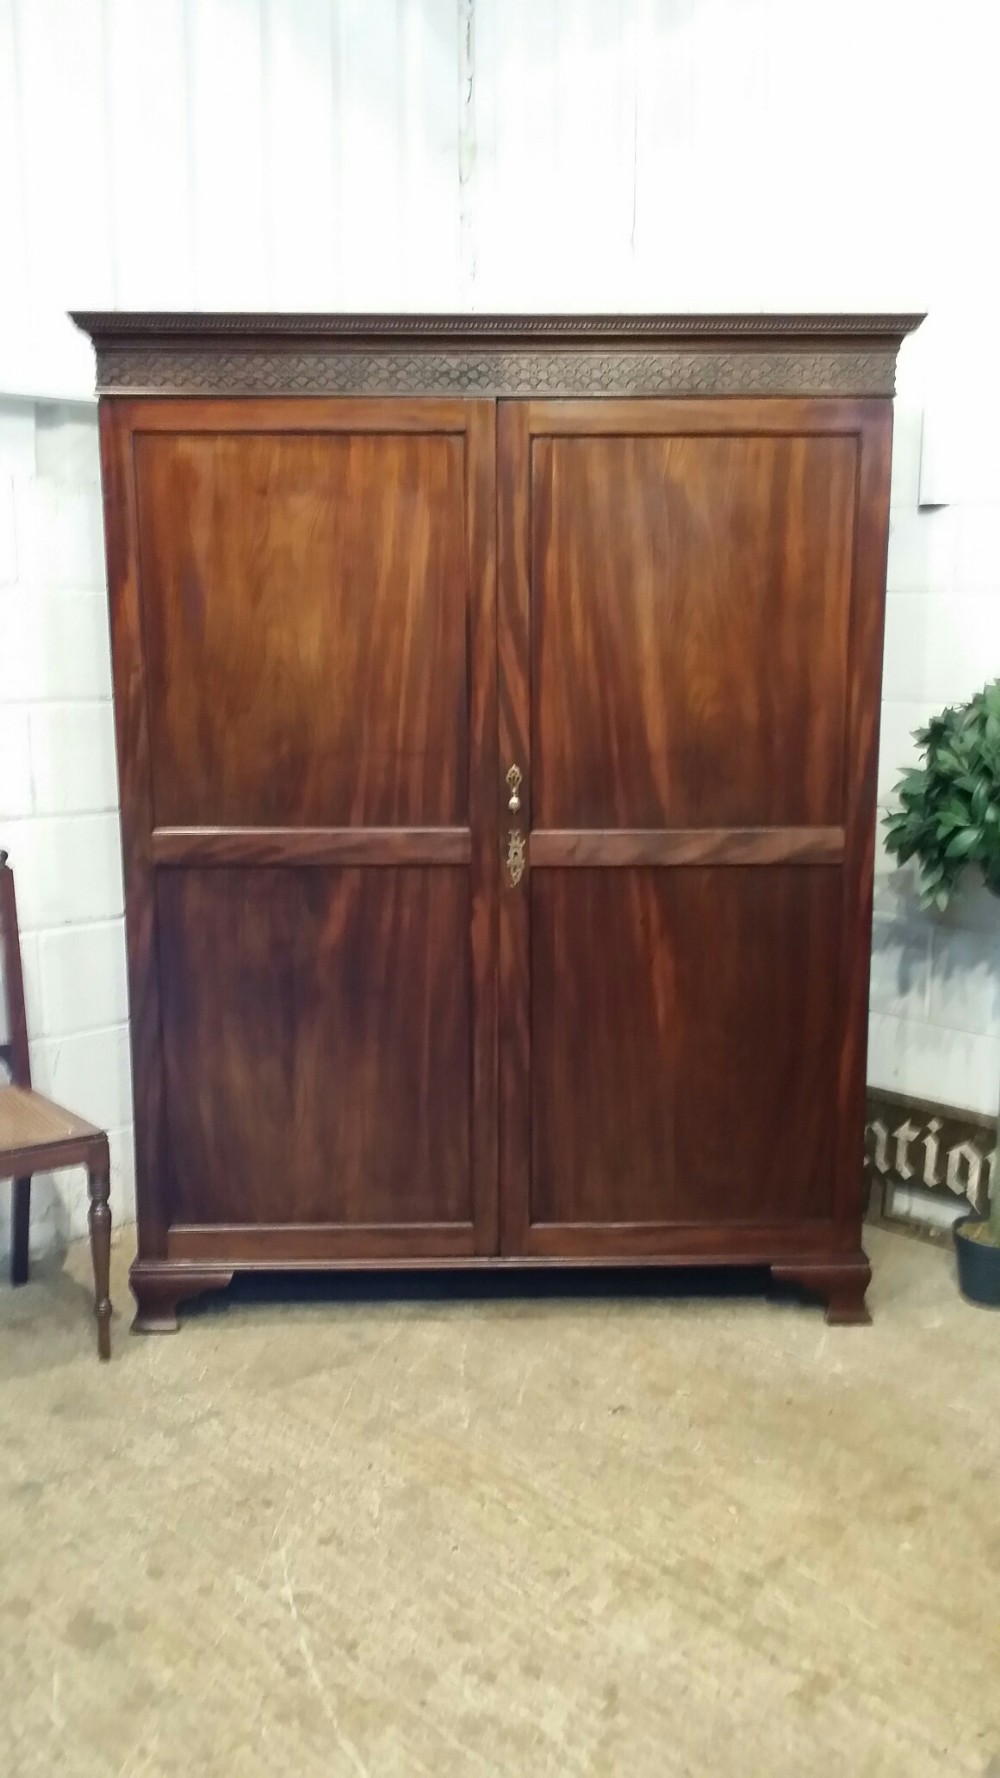 antique regency mahogany low double wardrobe 73 high c1820